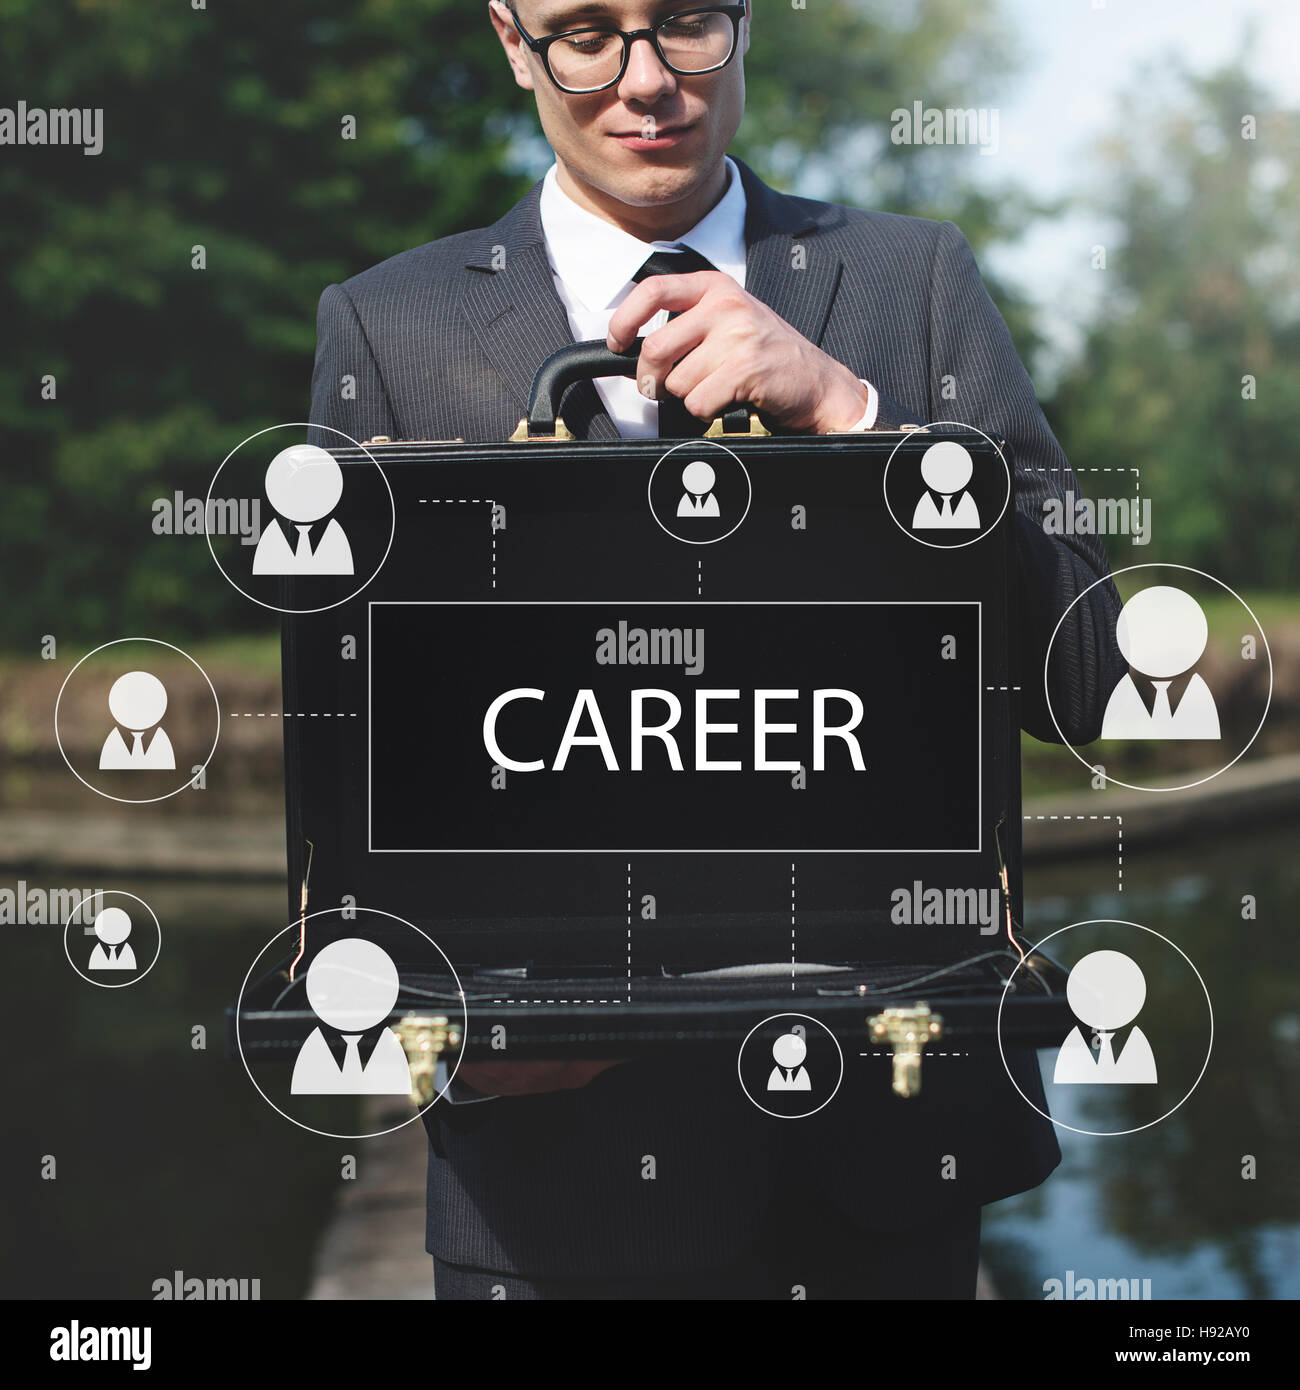 Recruitment Hiring Career job Emplyment Concept Stock Photo